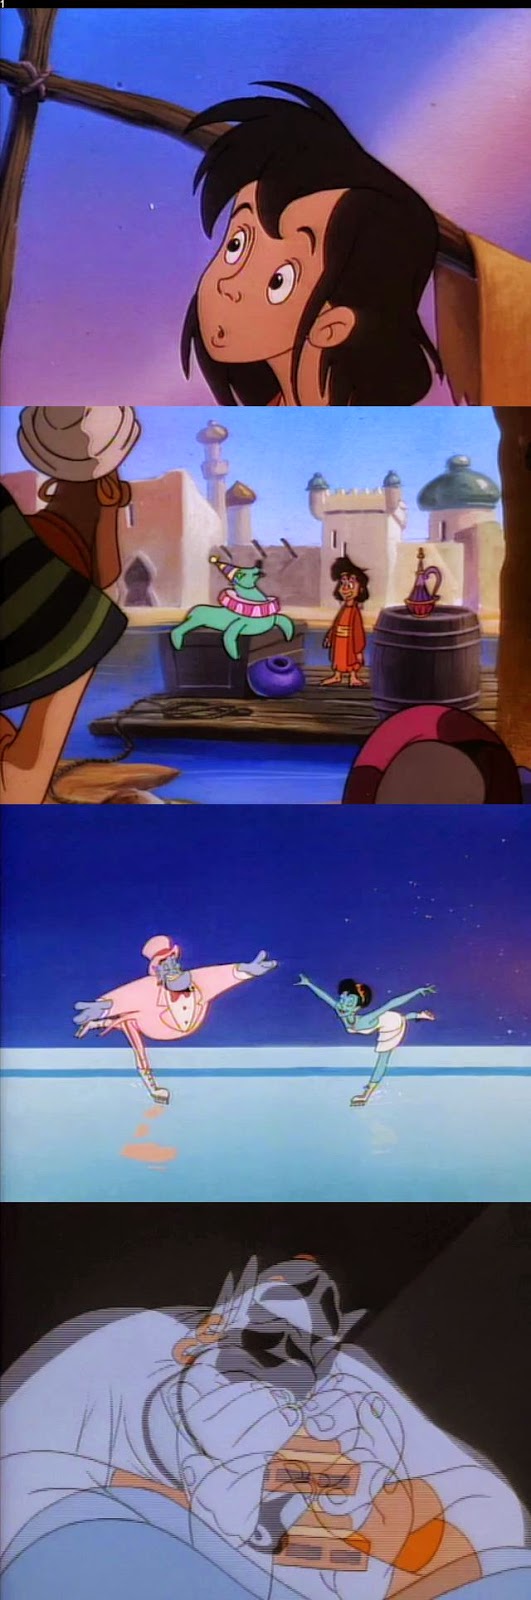 Aladdin la Serie [1992] [Latino] [Mega & Mediafire]